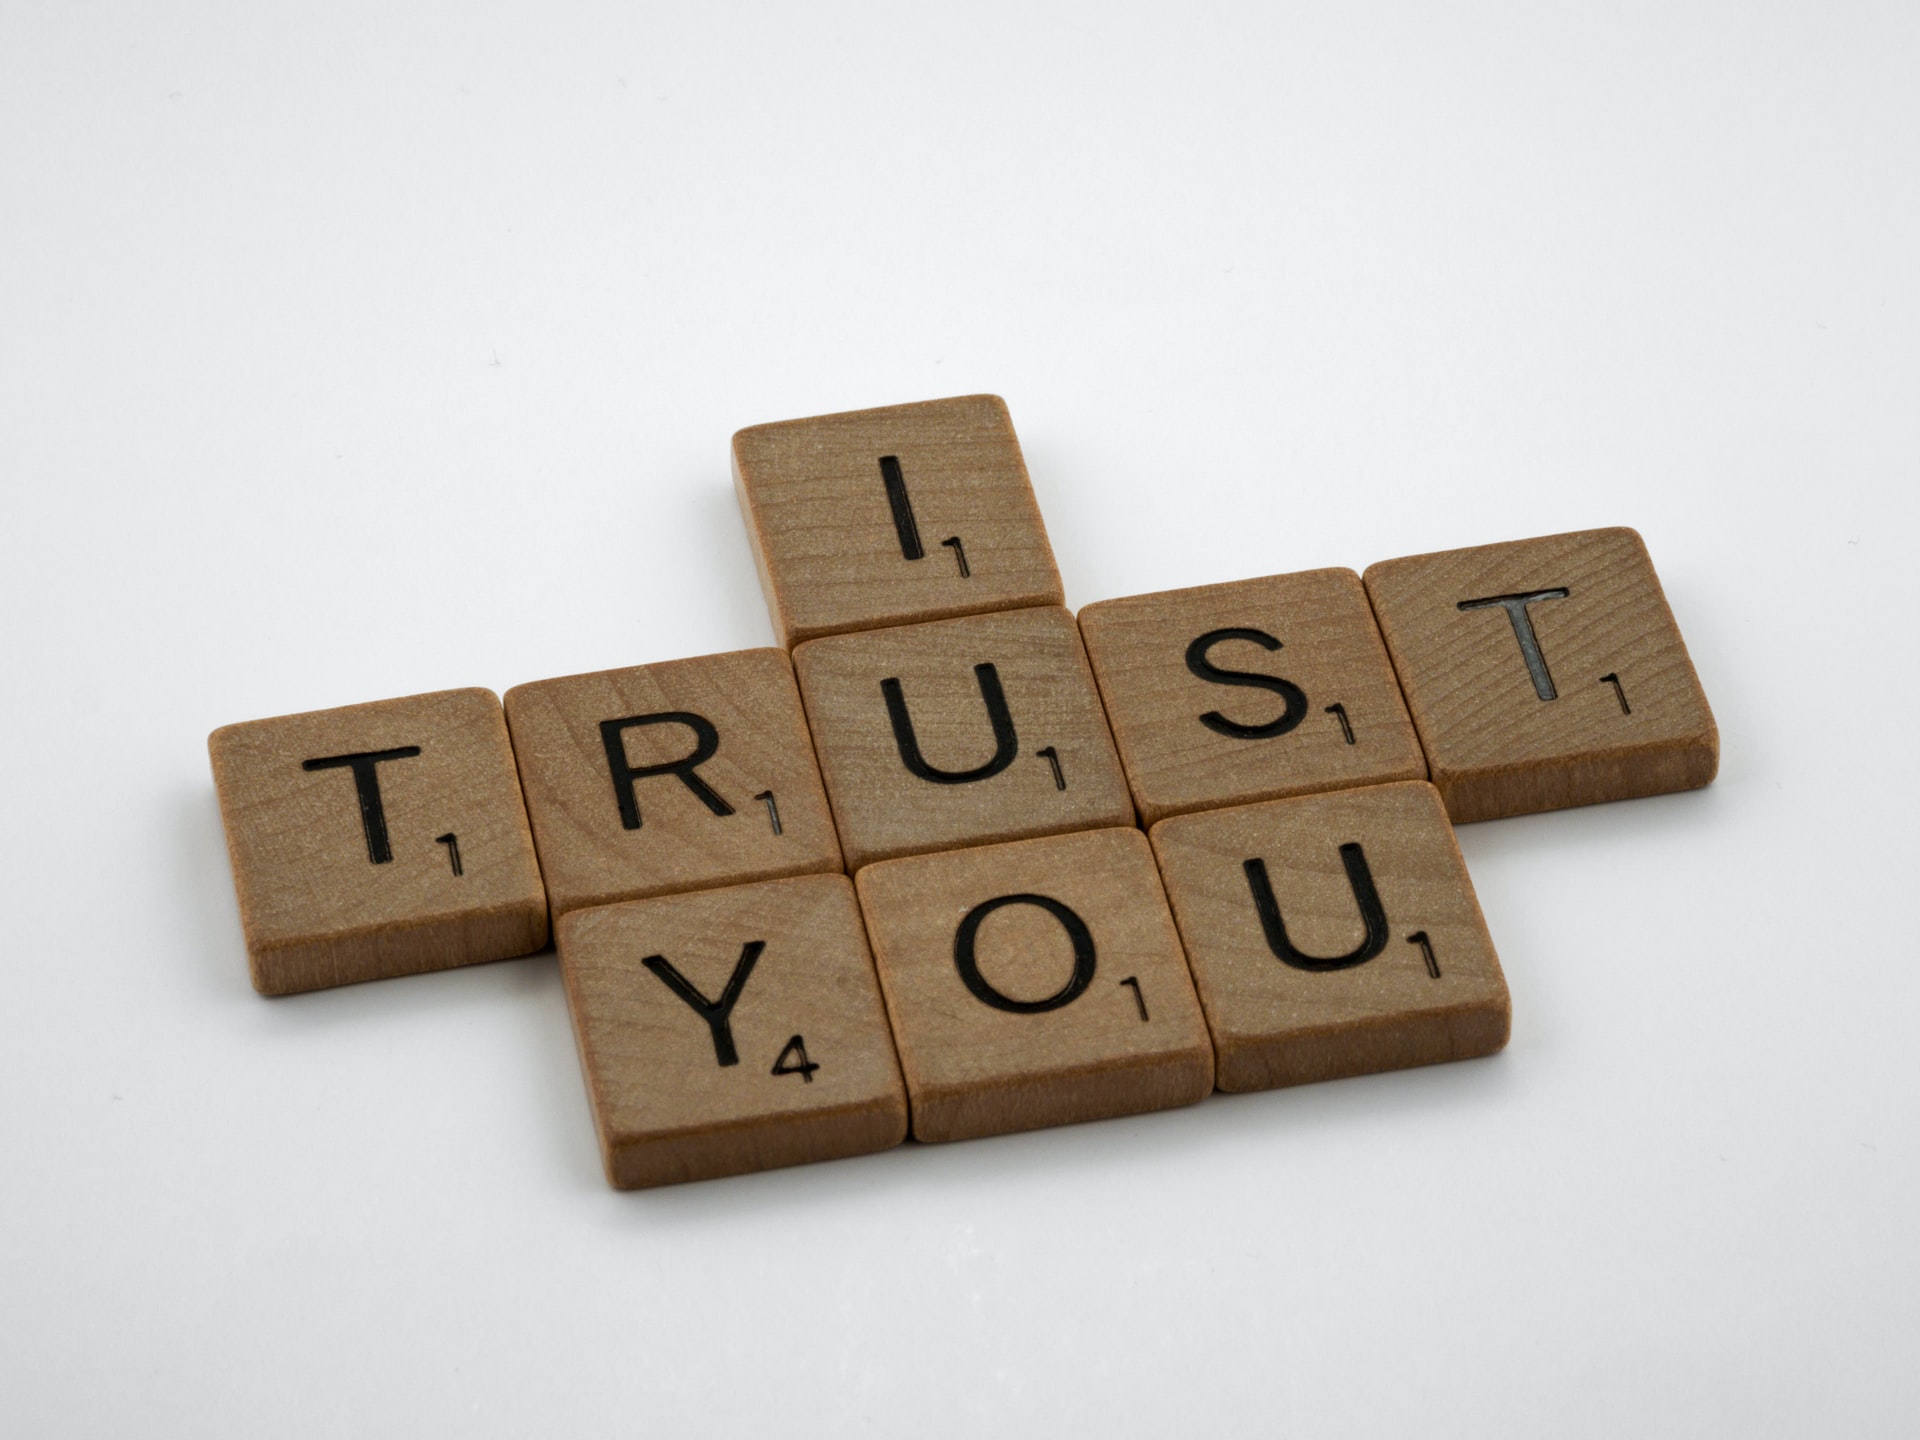 Build Customer Trust